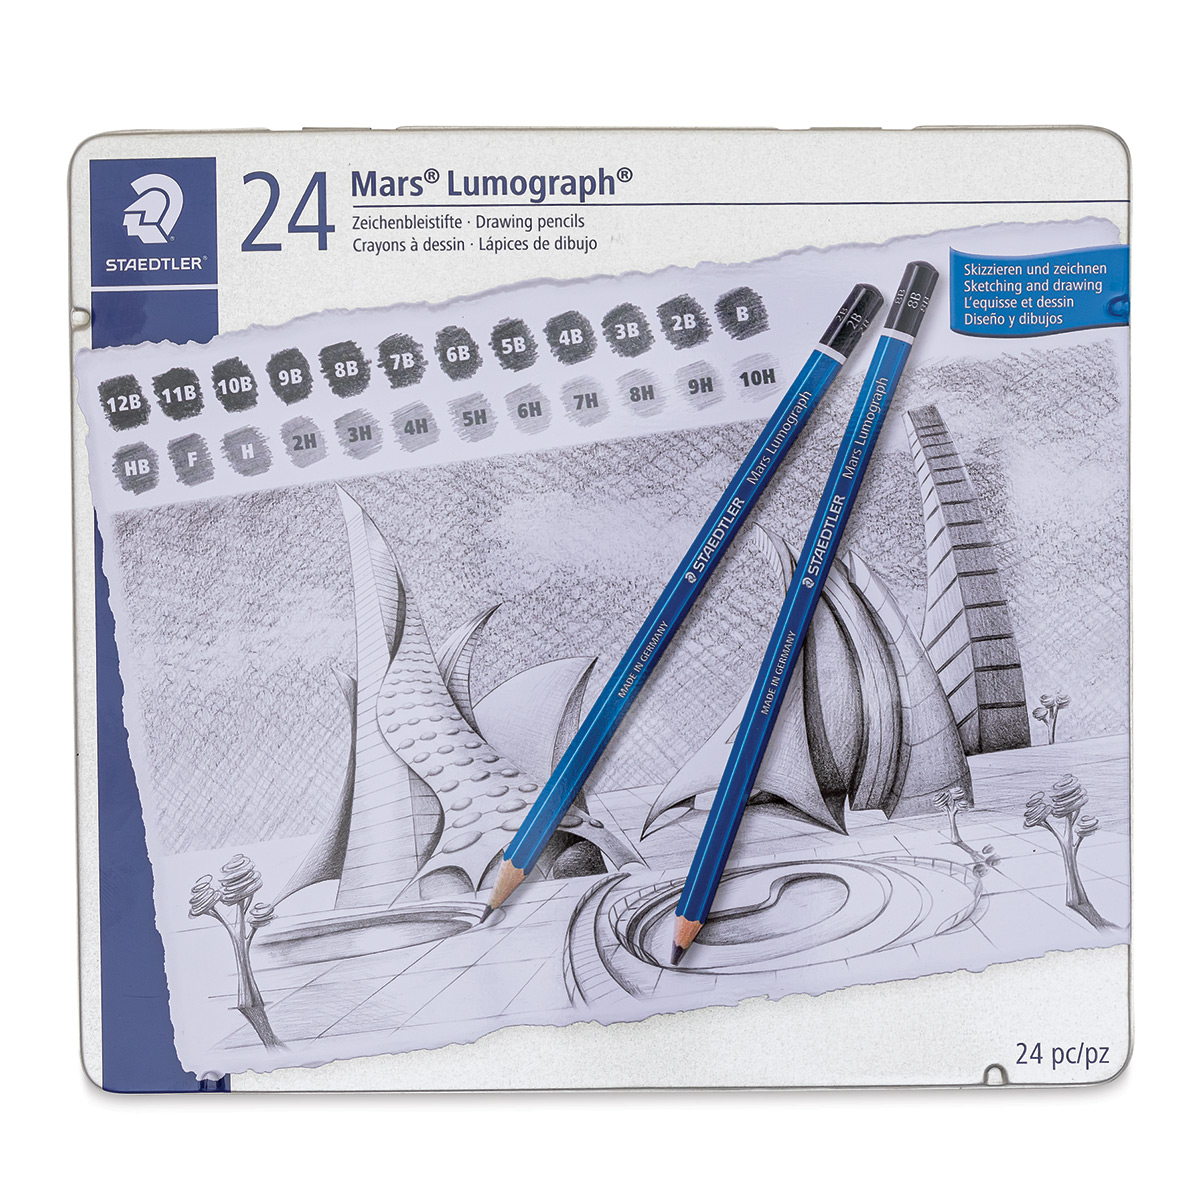 Professional 12/20 Sketch Pencil Set 9H-9B Graphite Shading